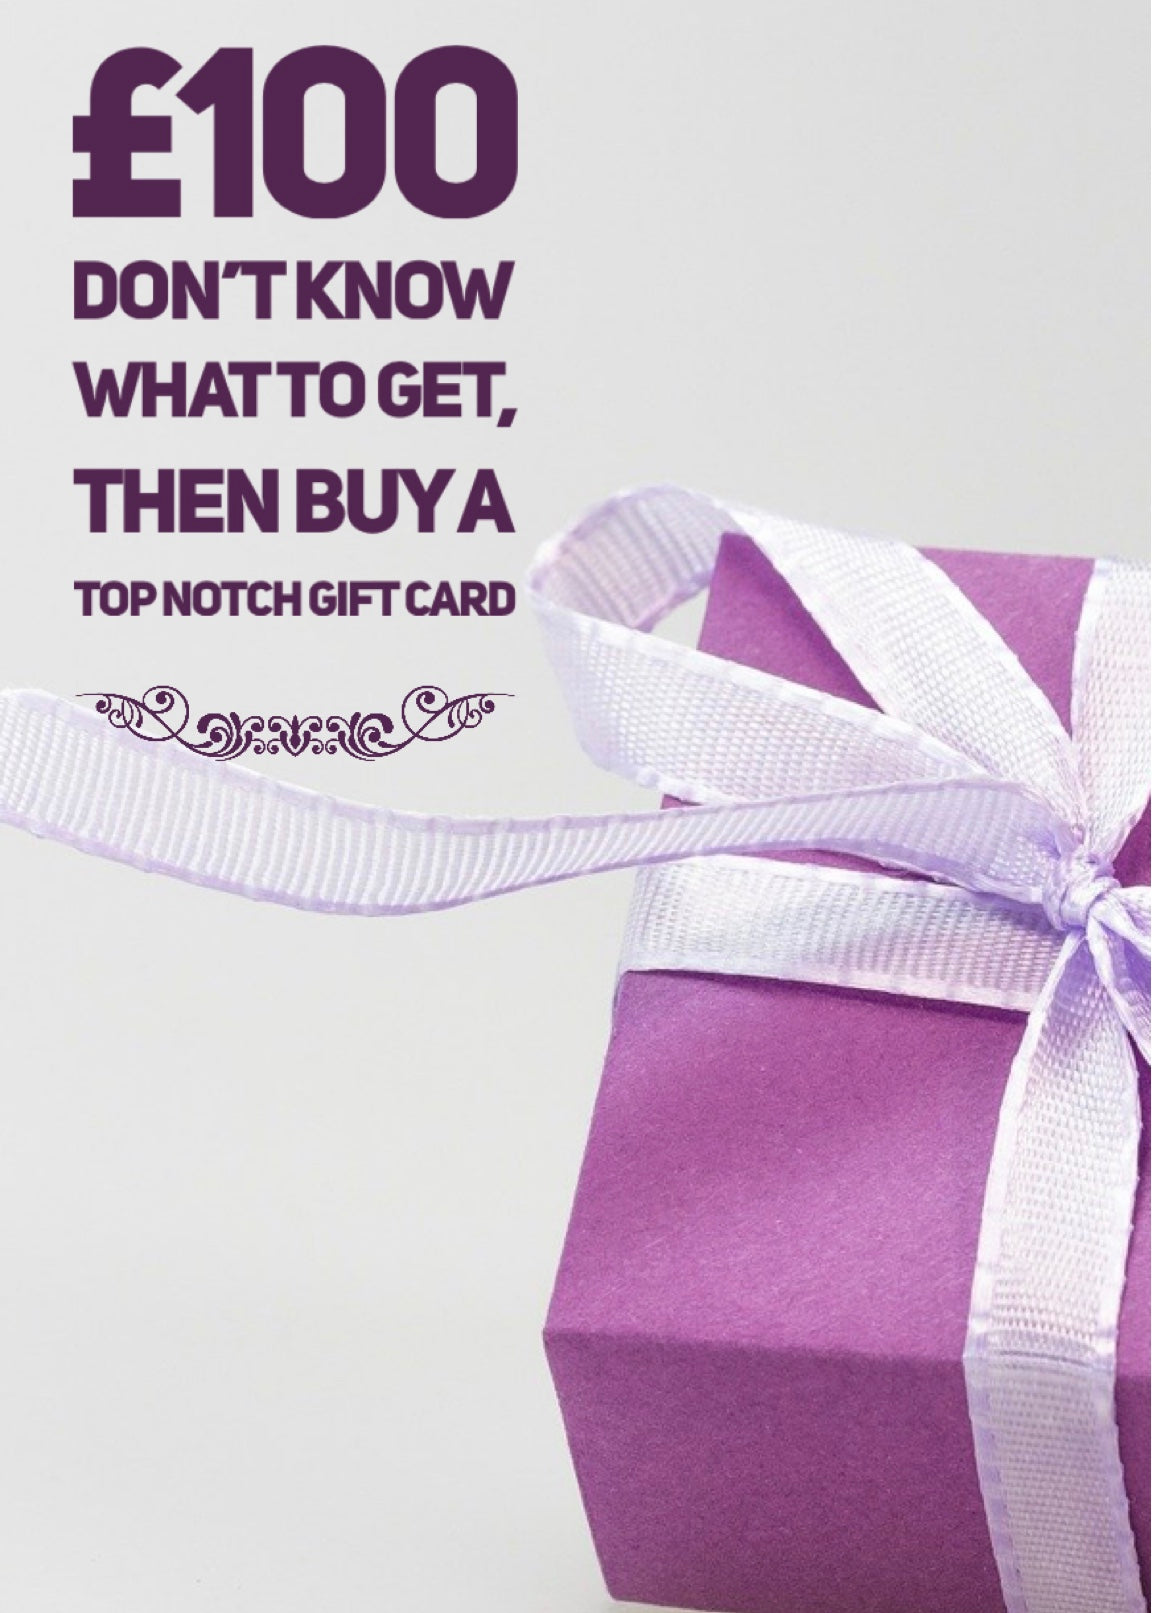 Top. Notch Gift Card